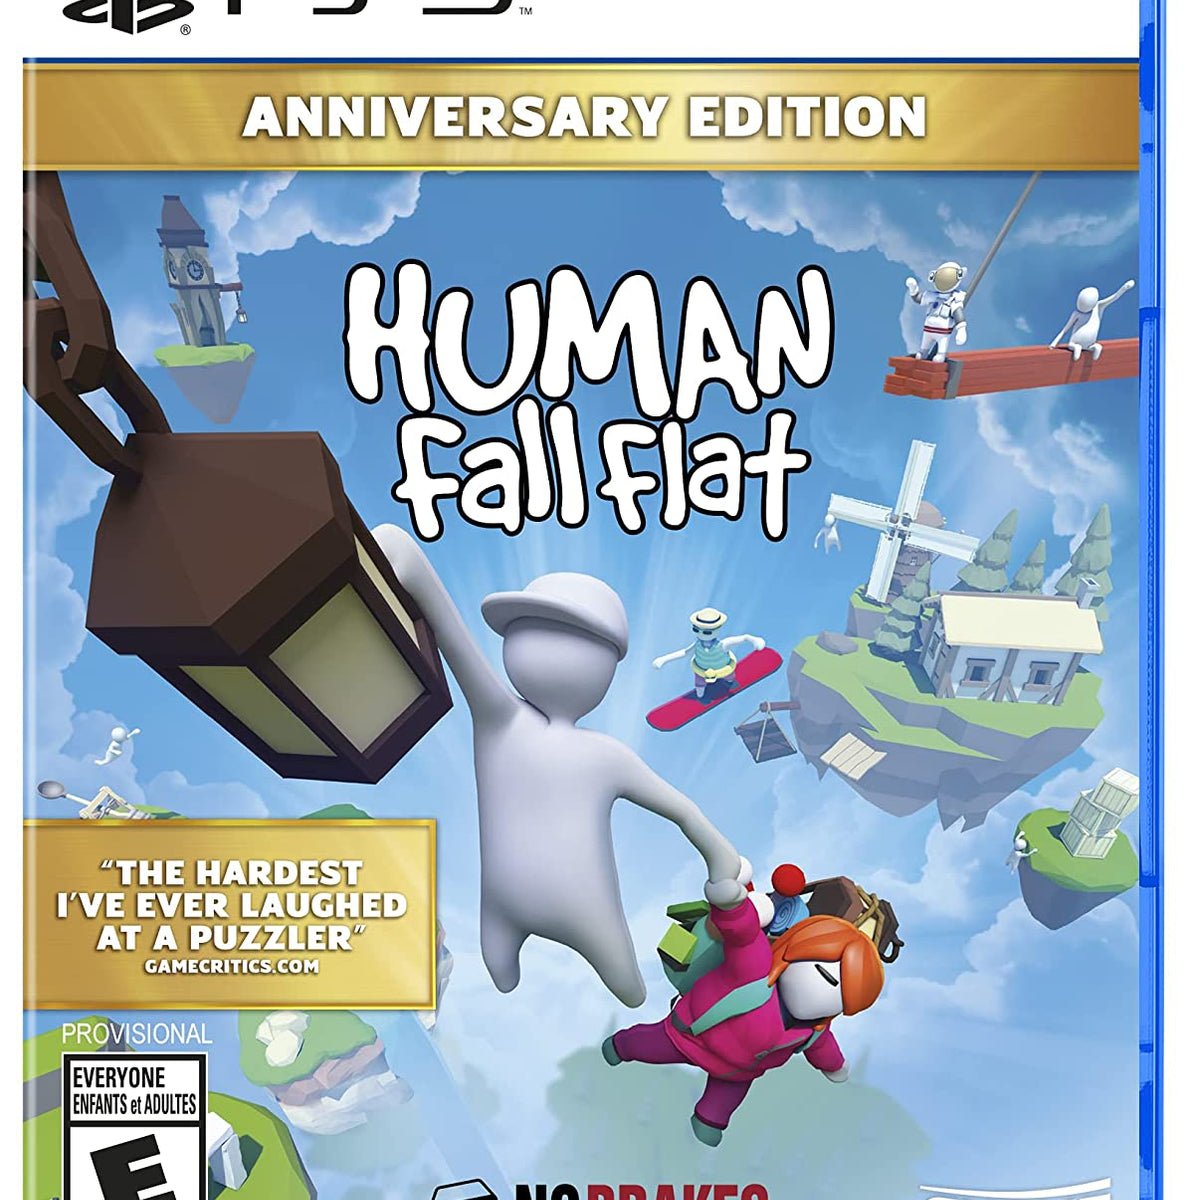 Human Fall Flat Anniversary Edition - PS5 — VIDEOGAMESPLUS.CA